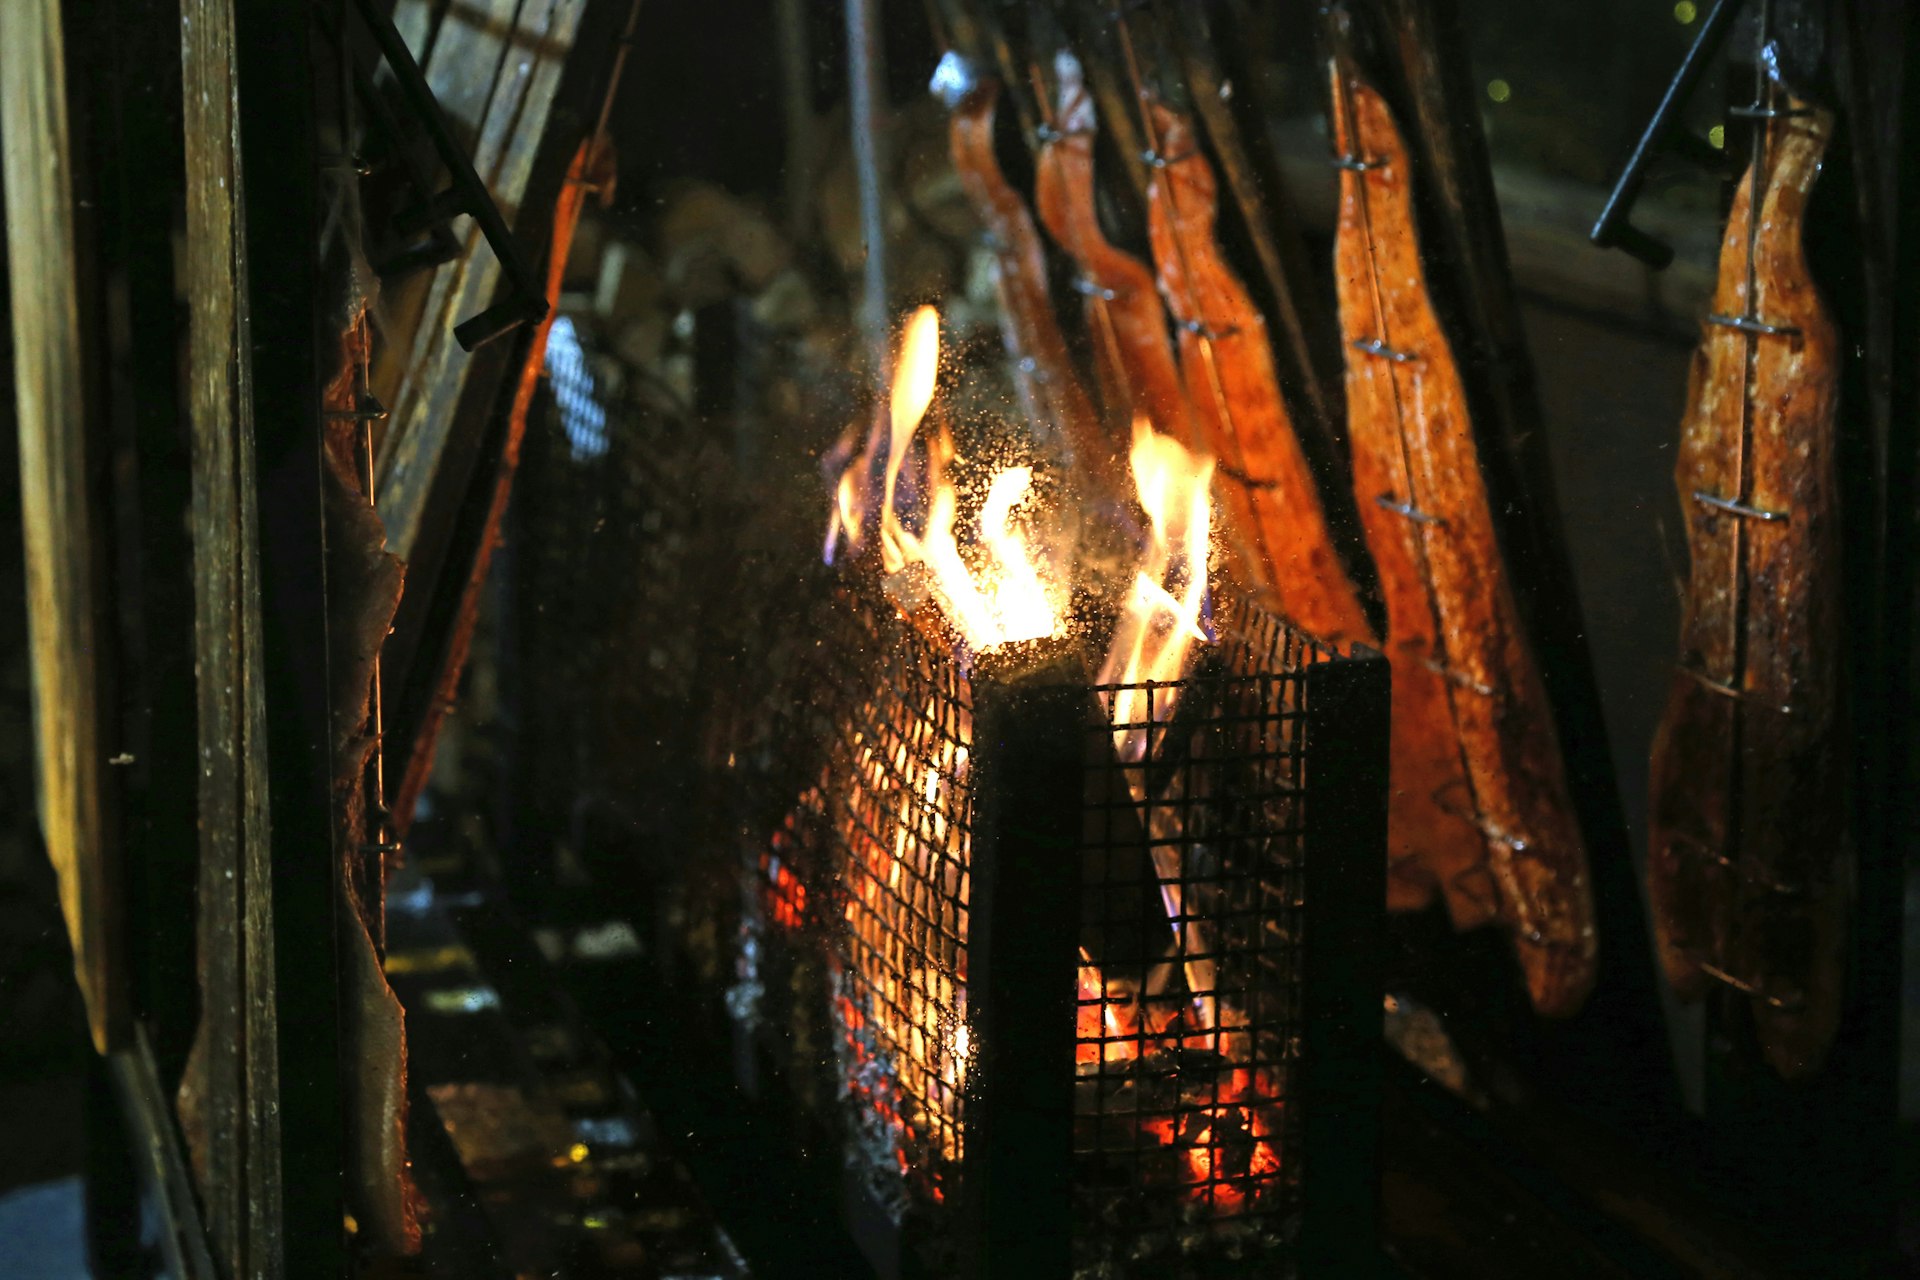 Flammlachs fire-roasted salmon at Hamburg Christmas market